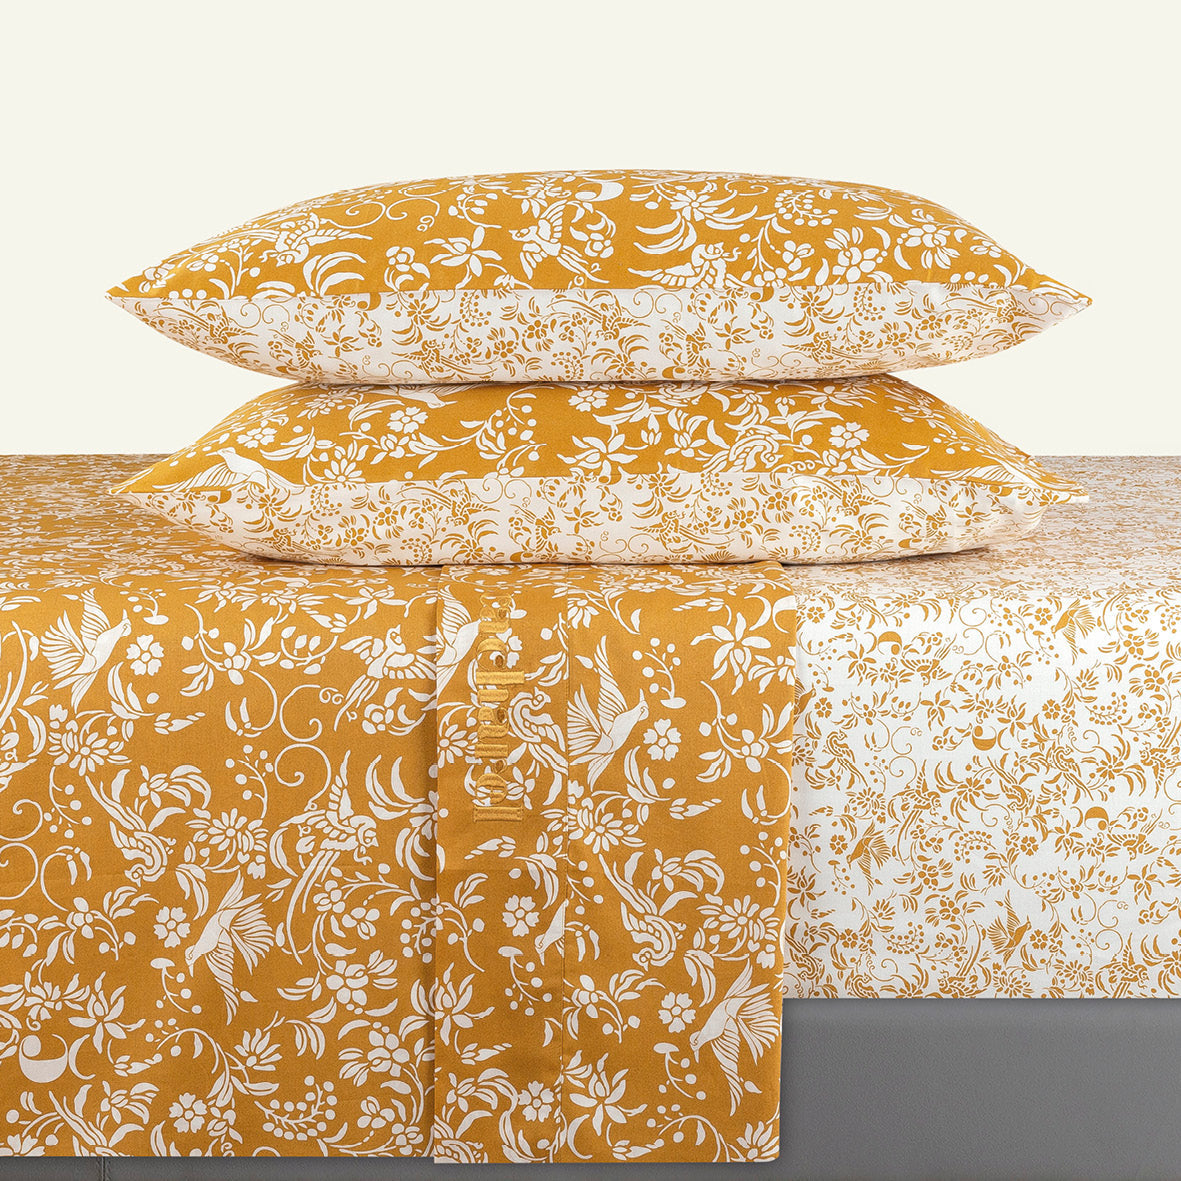 Sheet set : fitted sheet, flat sheet, pillowcase(s) in satin cotton - Birds yellow